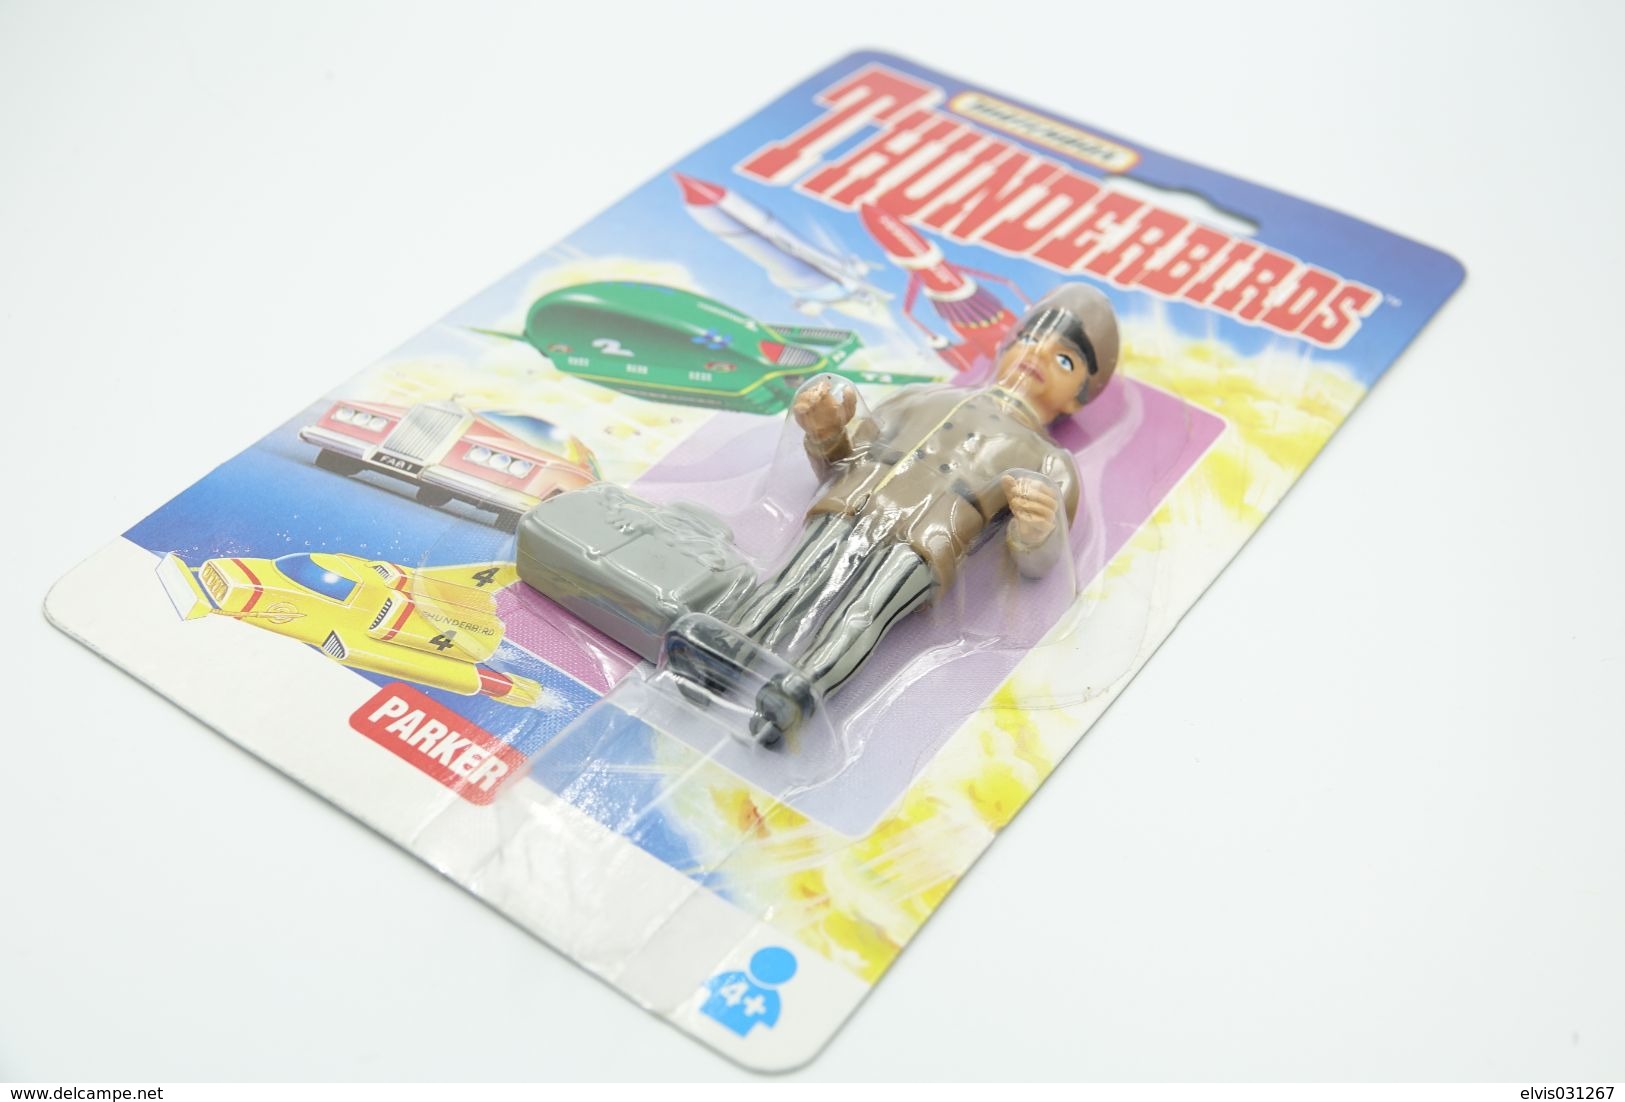 Vintage ACTION FIGURE THE THUNDERBIRDS : PARKER - MOC MINT ON CARD - Original MATCHBOX 1992-3 - LESNEY - GI JOE - Action Man